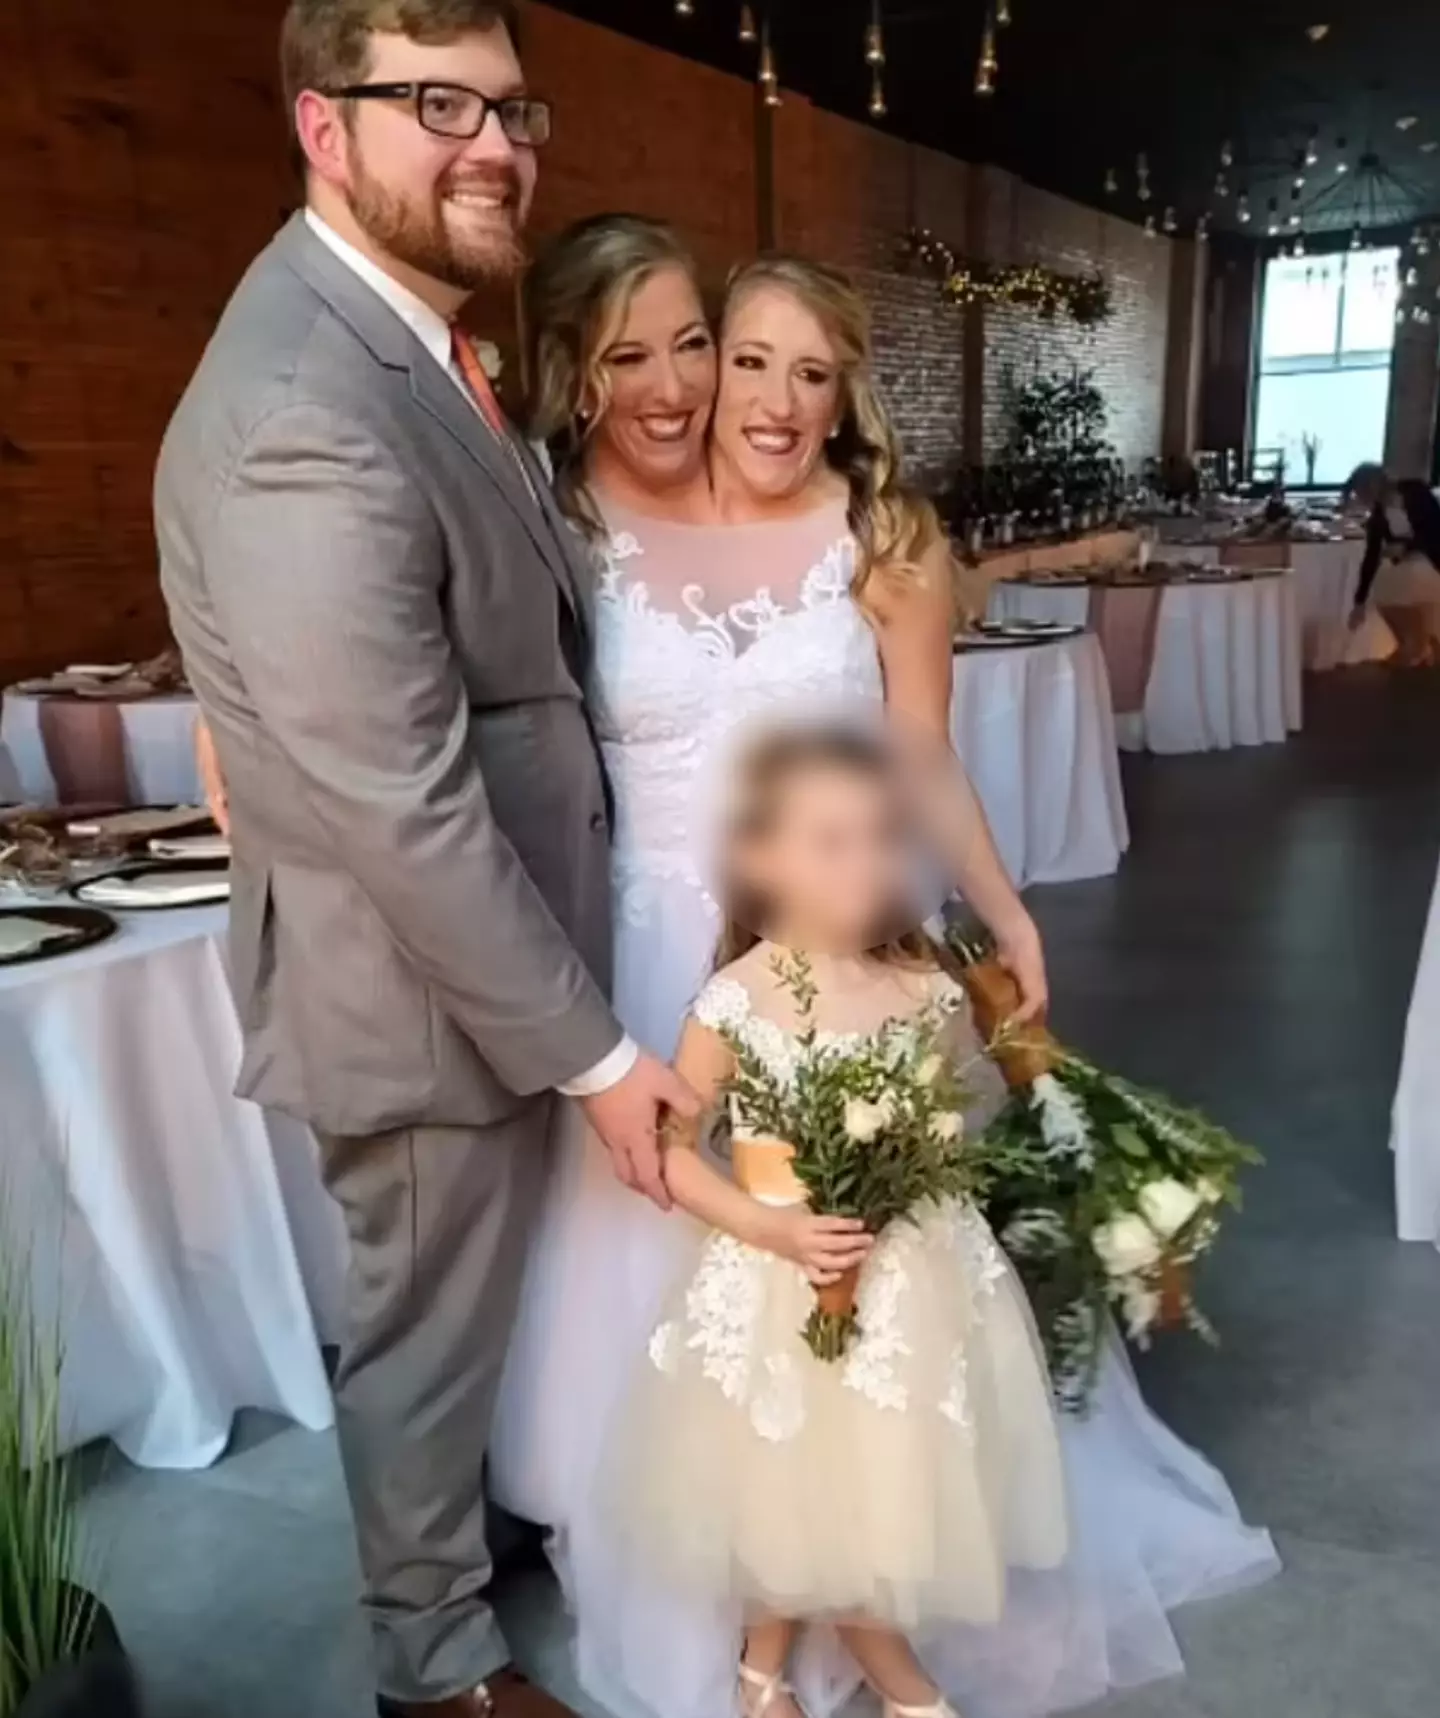 Josh Bowling's daughter wore a bridesmaid's dress. (TikTok/Abbyandbrittanyhensel)